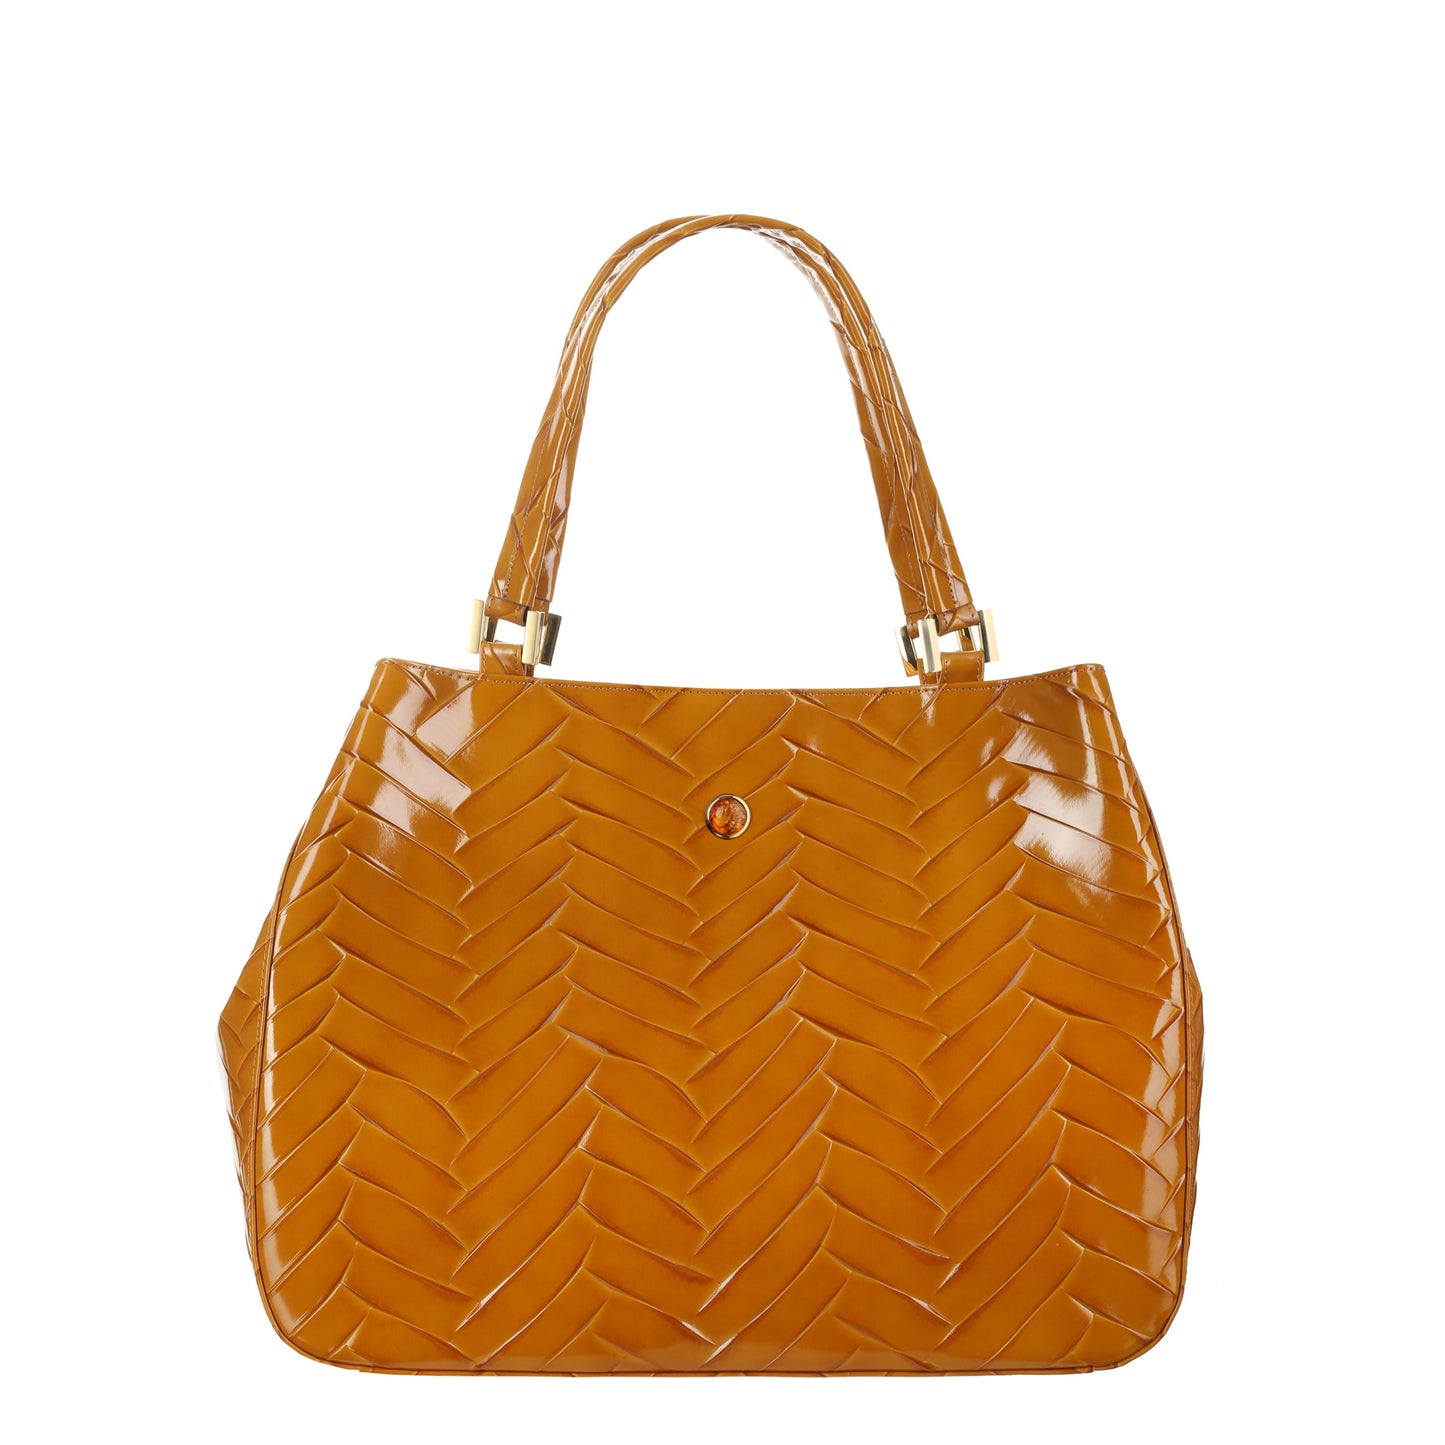 MAMMA BRAID HONEY leather women's handbag